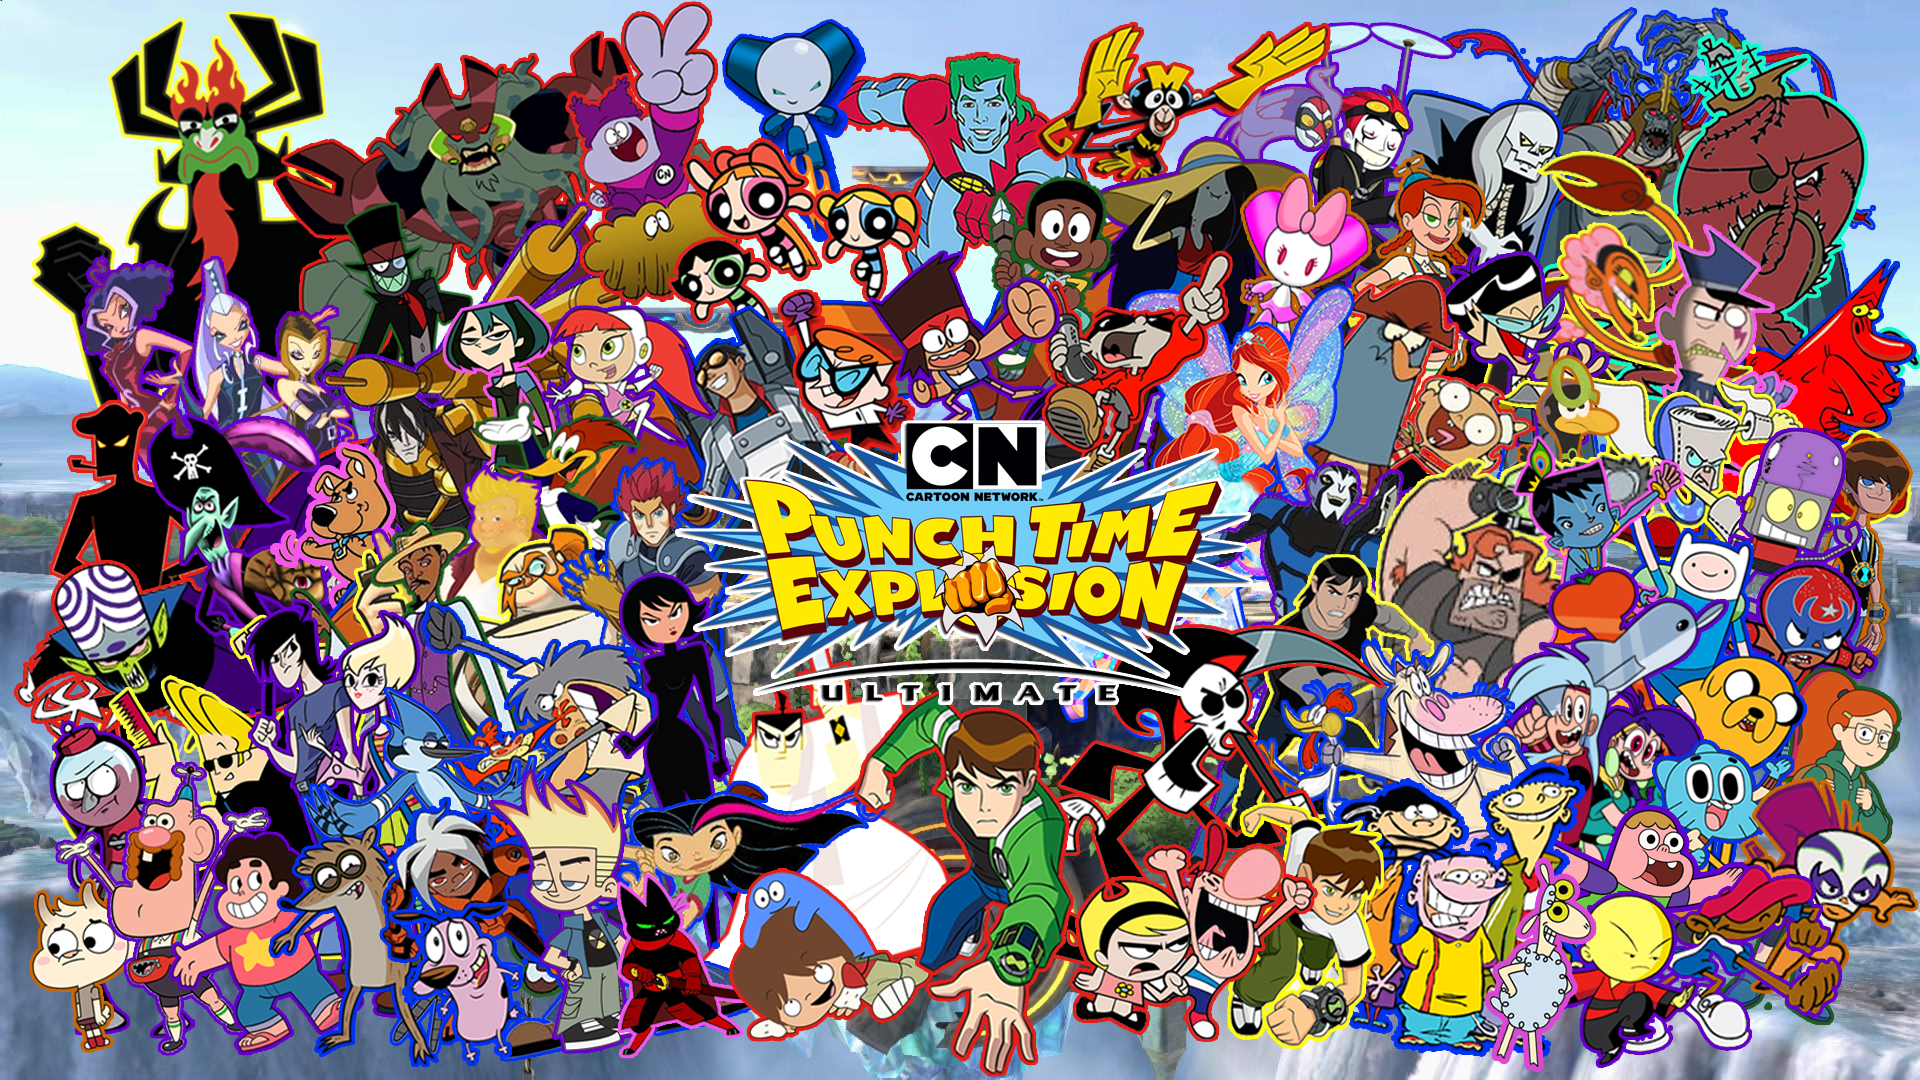 Cartoon Network: Punch Time Explosion XL Review - GameSpot